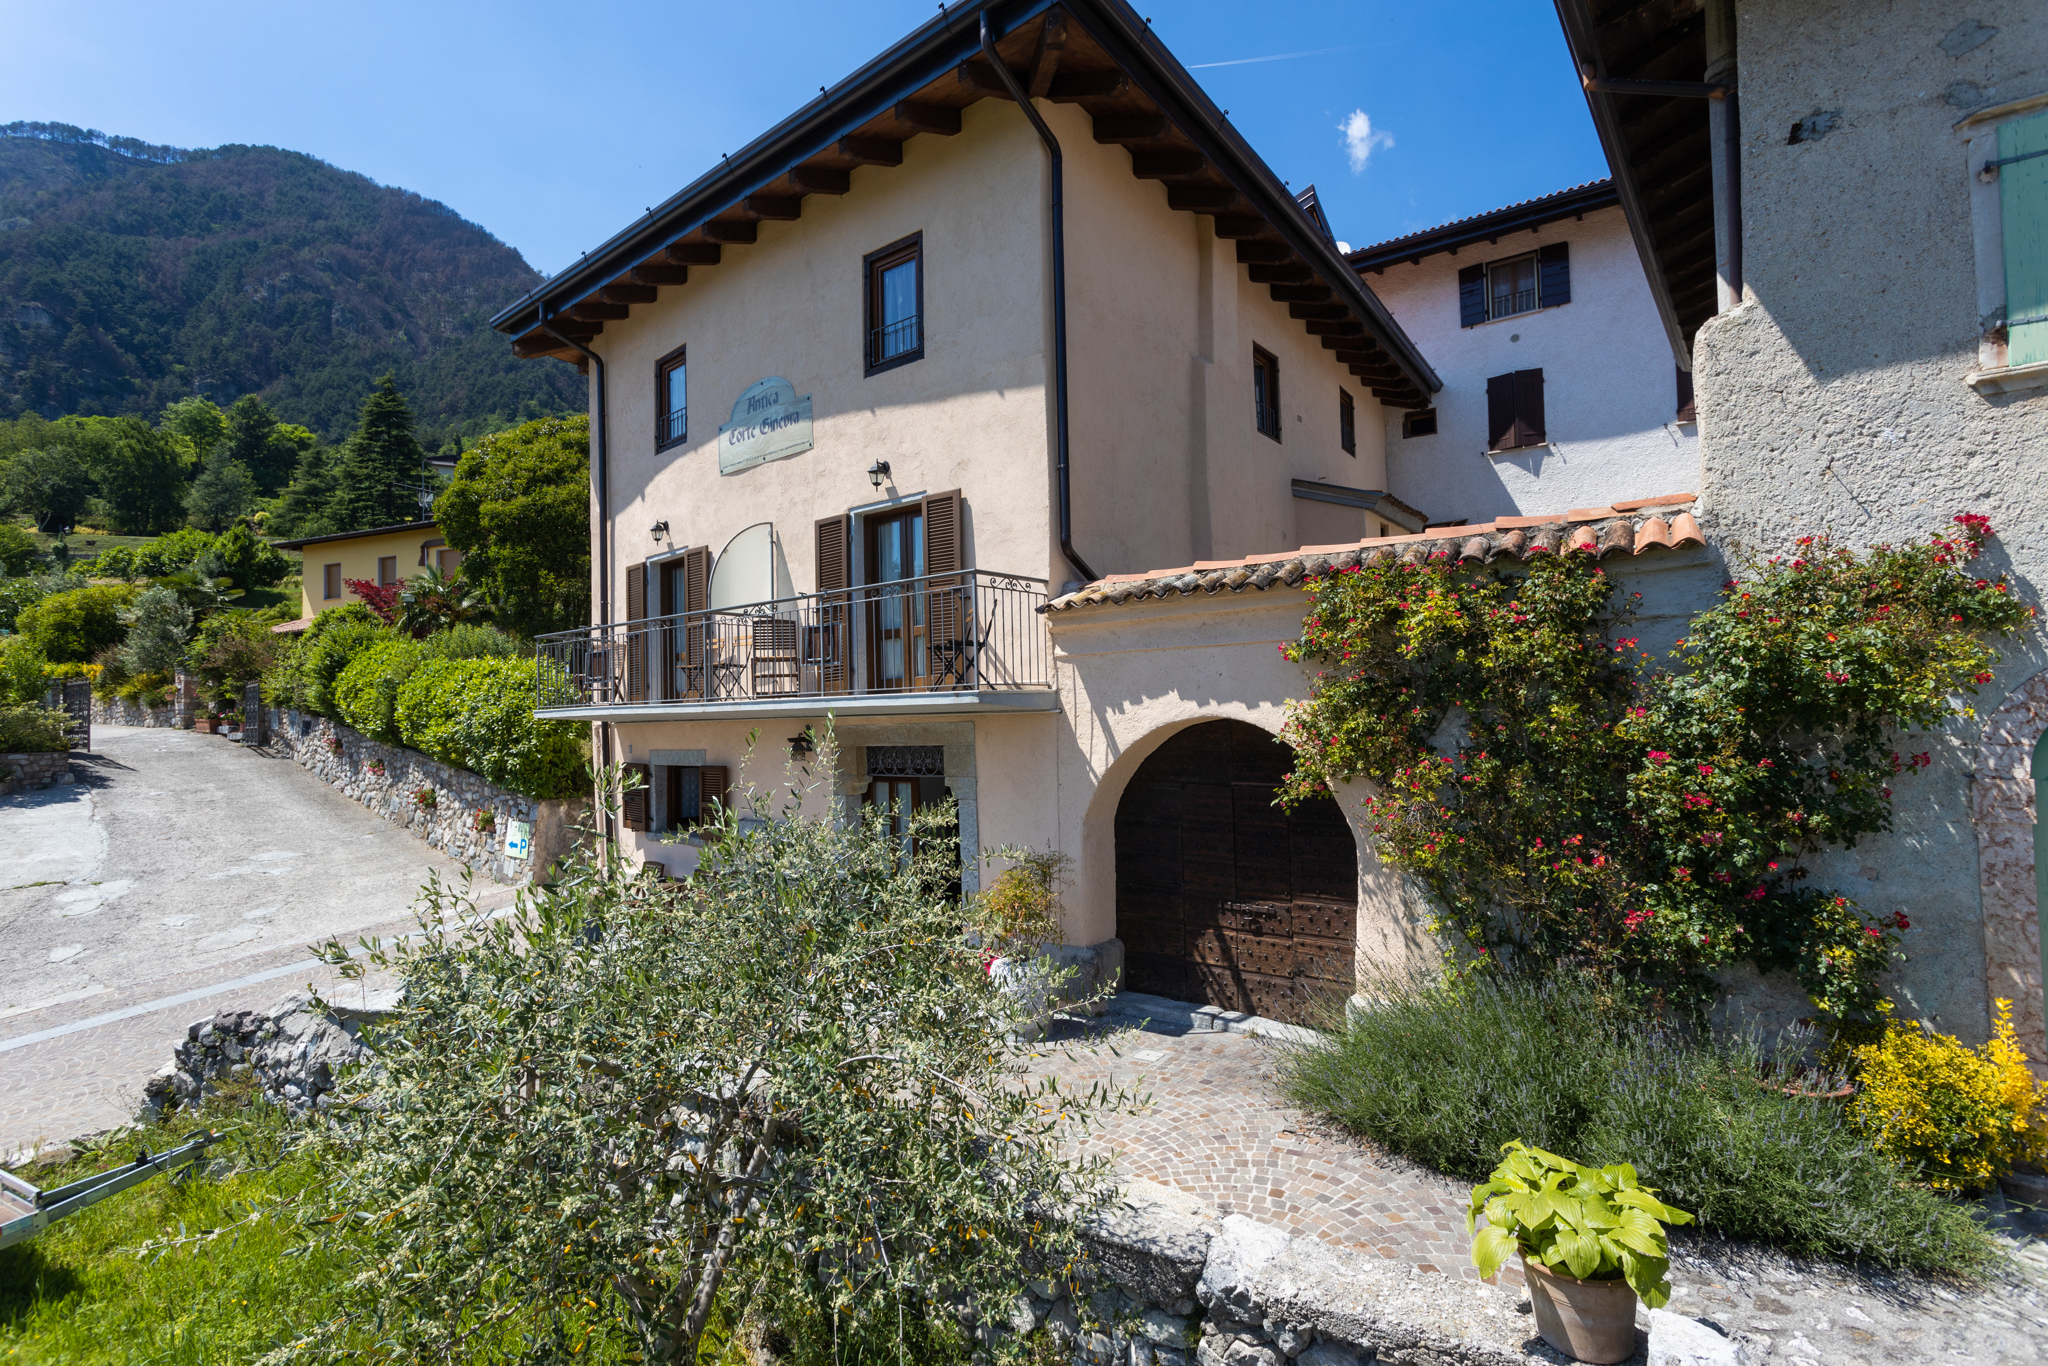 Ferienhaus mit Balkon   Gardasee - Lago di Garda